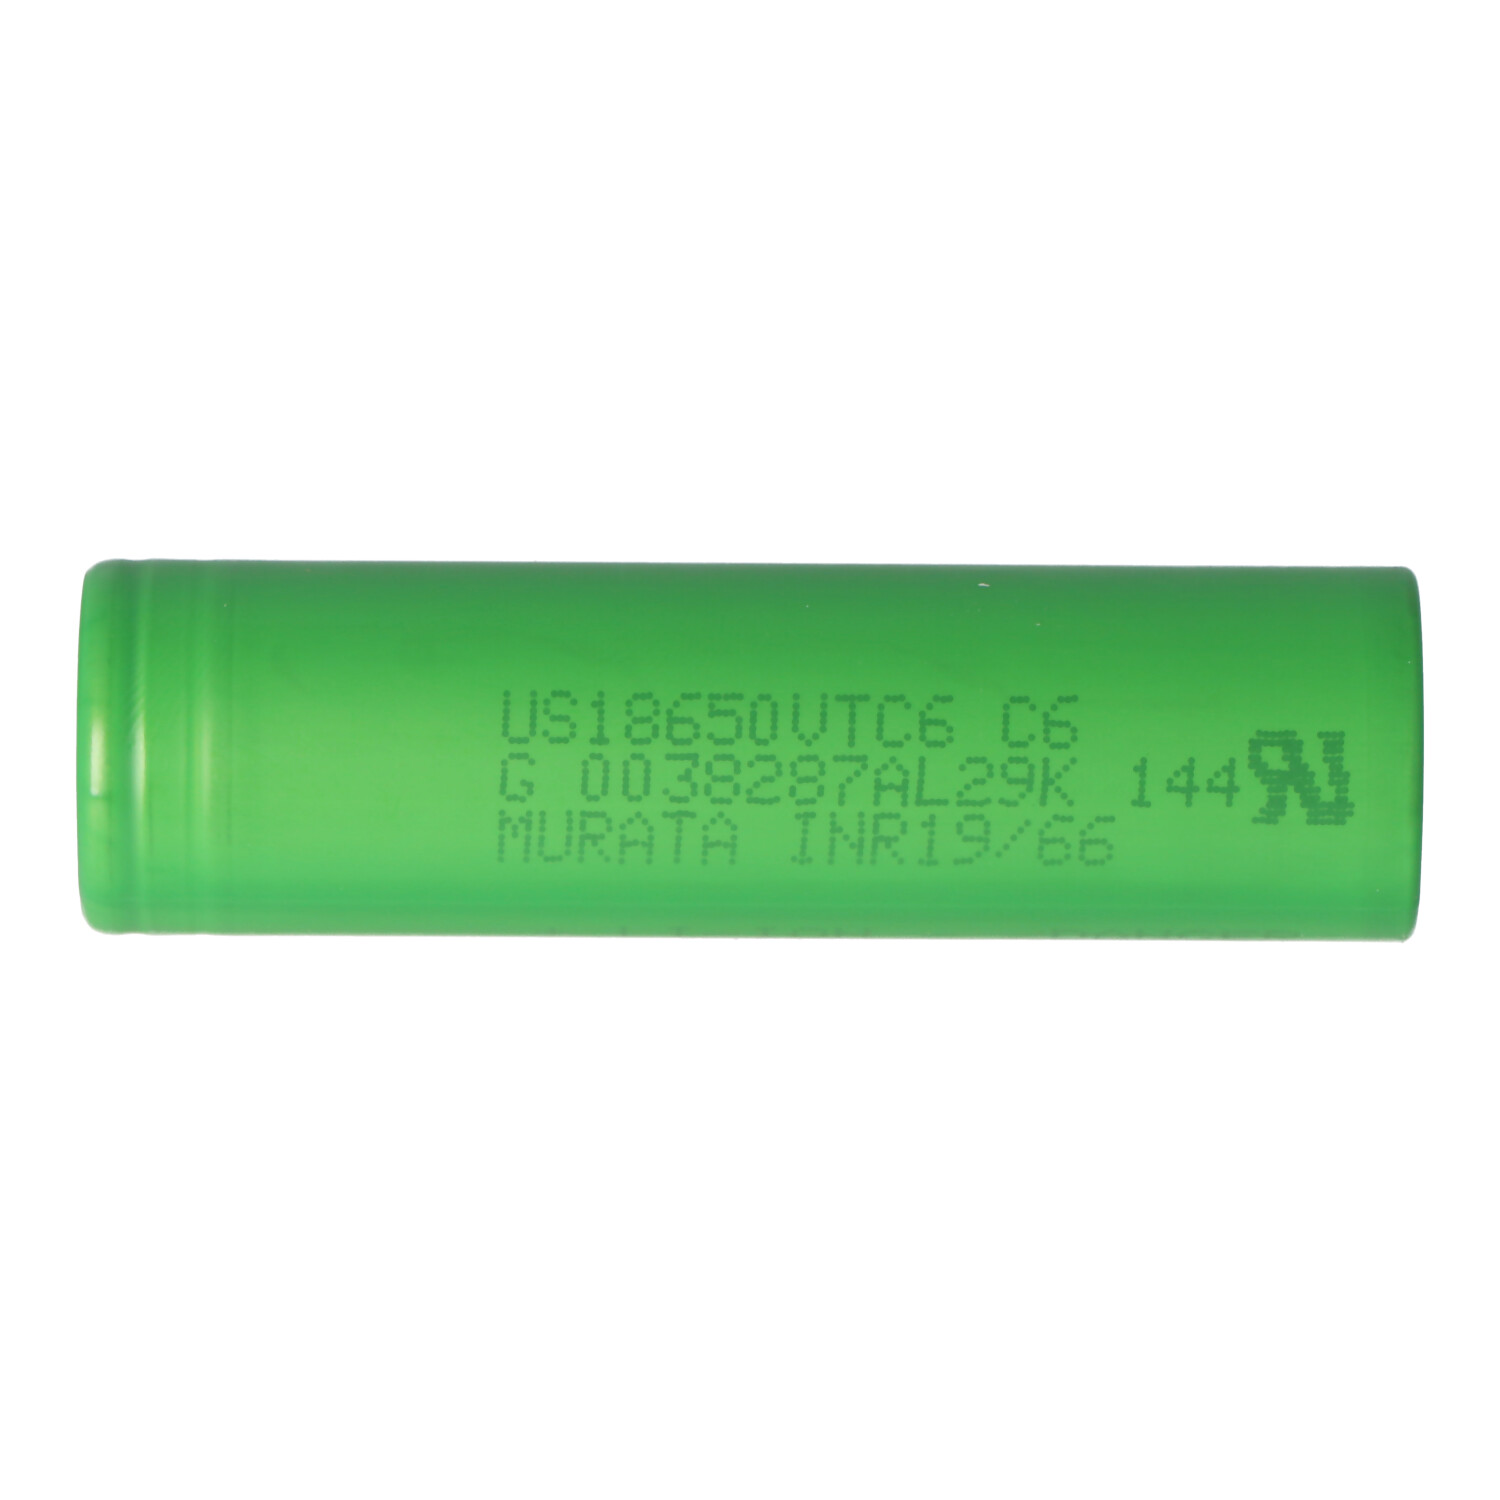 typ. Li-Ion SONY und Akku 65,2x18,35mm Akku, Lithium-Ionen US18650VTC6 mAh 31 3000mAh - für E-Shisha 3,6 3120 Sony Konion E-Zigarette Volt min.